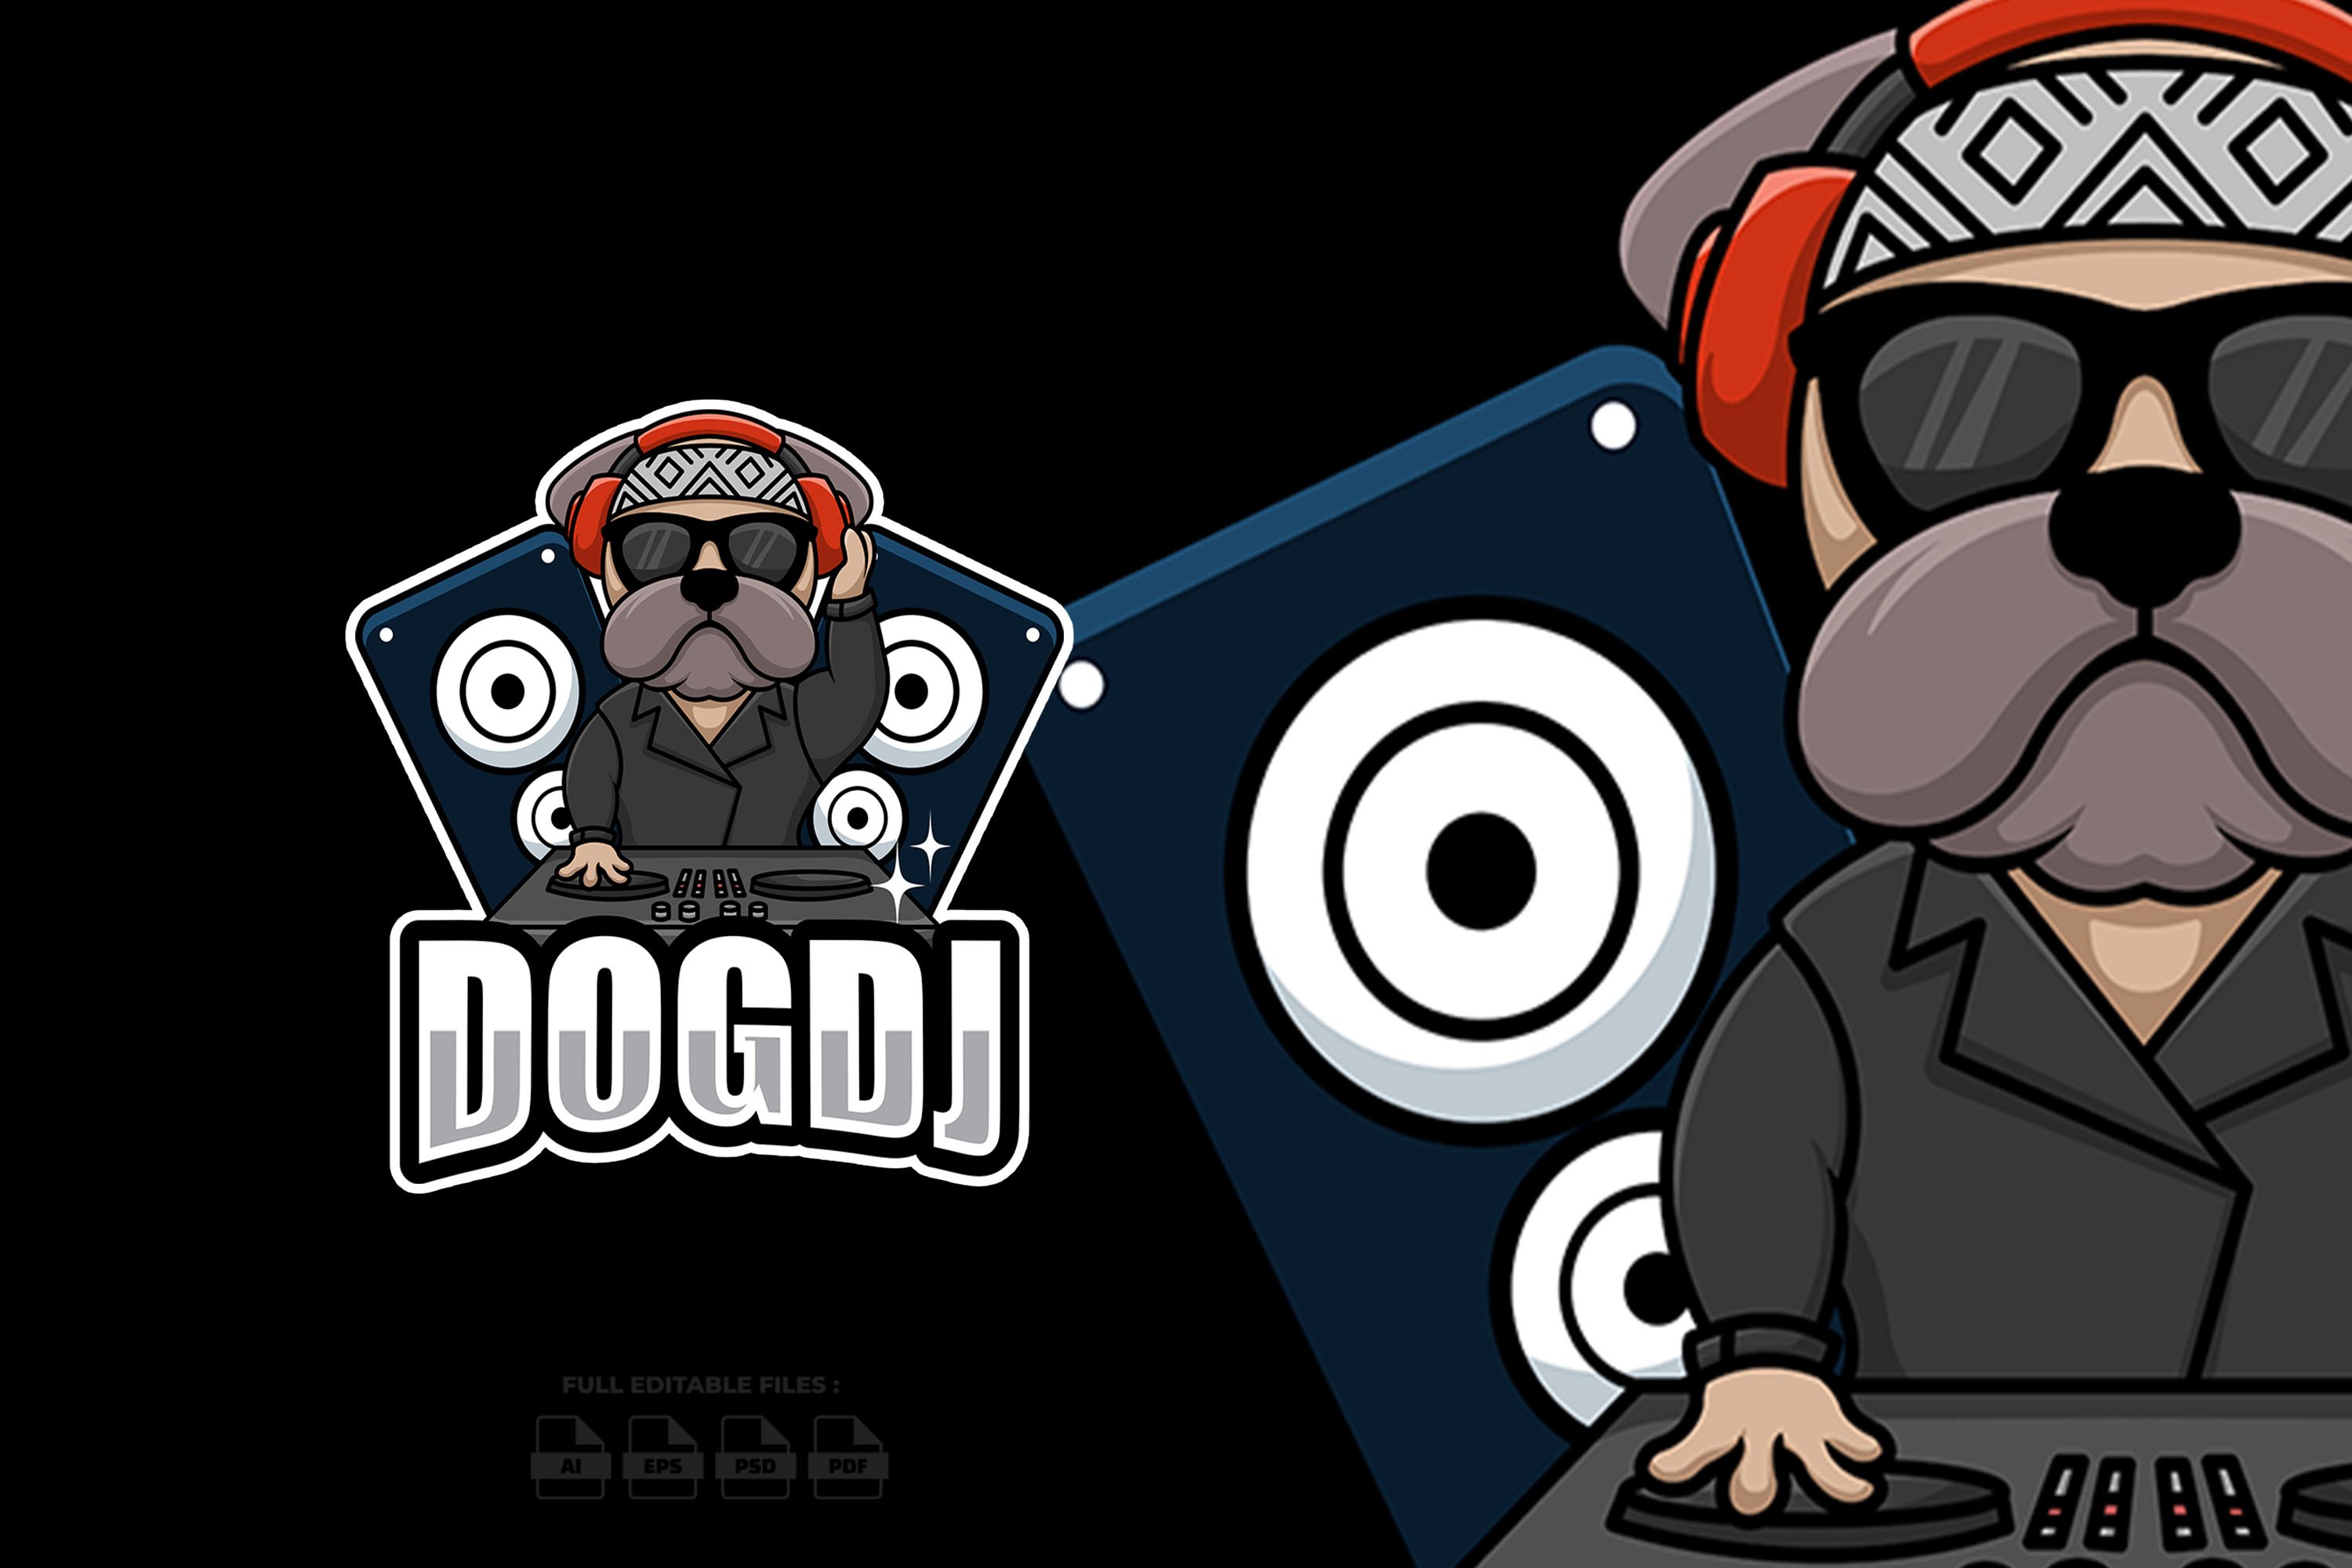 Dog DJ Mascot Logo cover image.